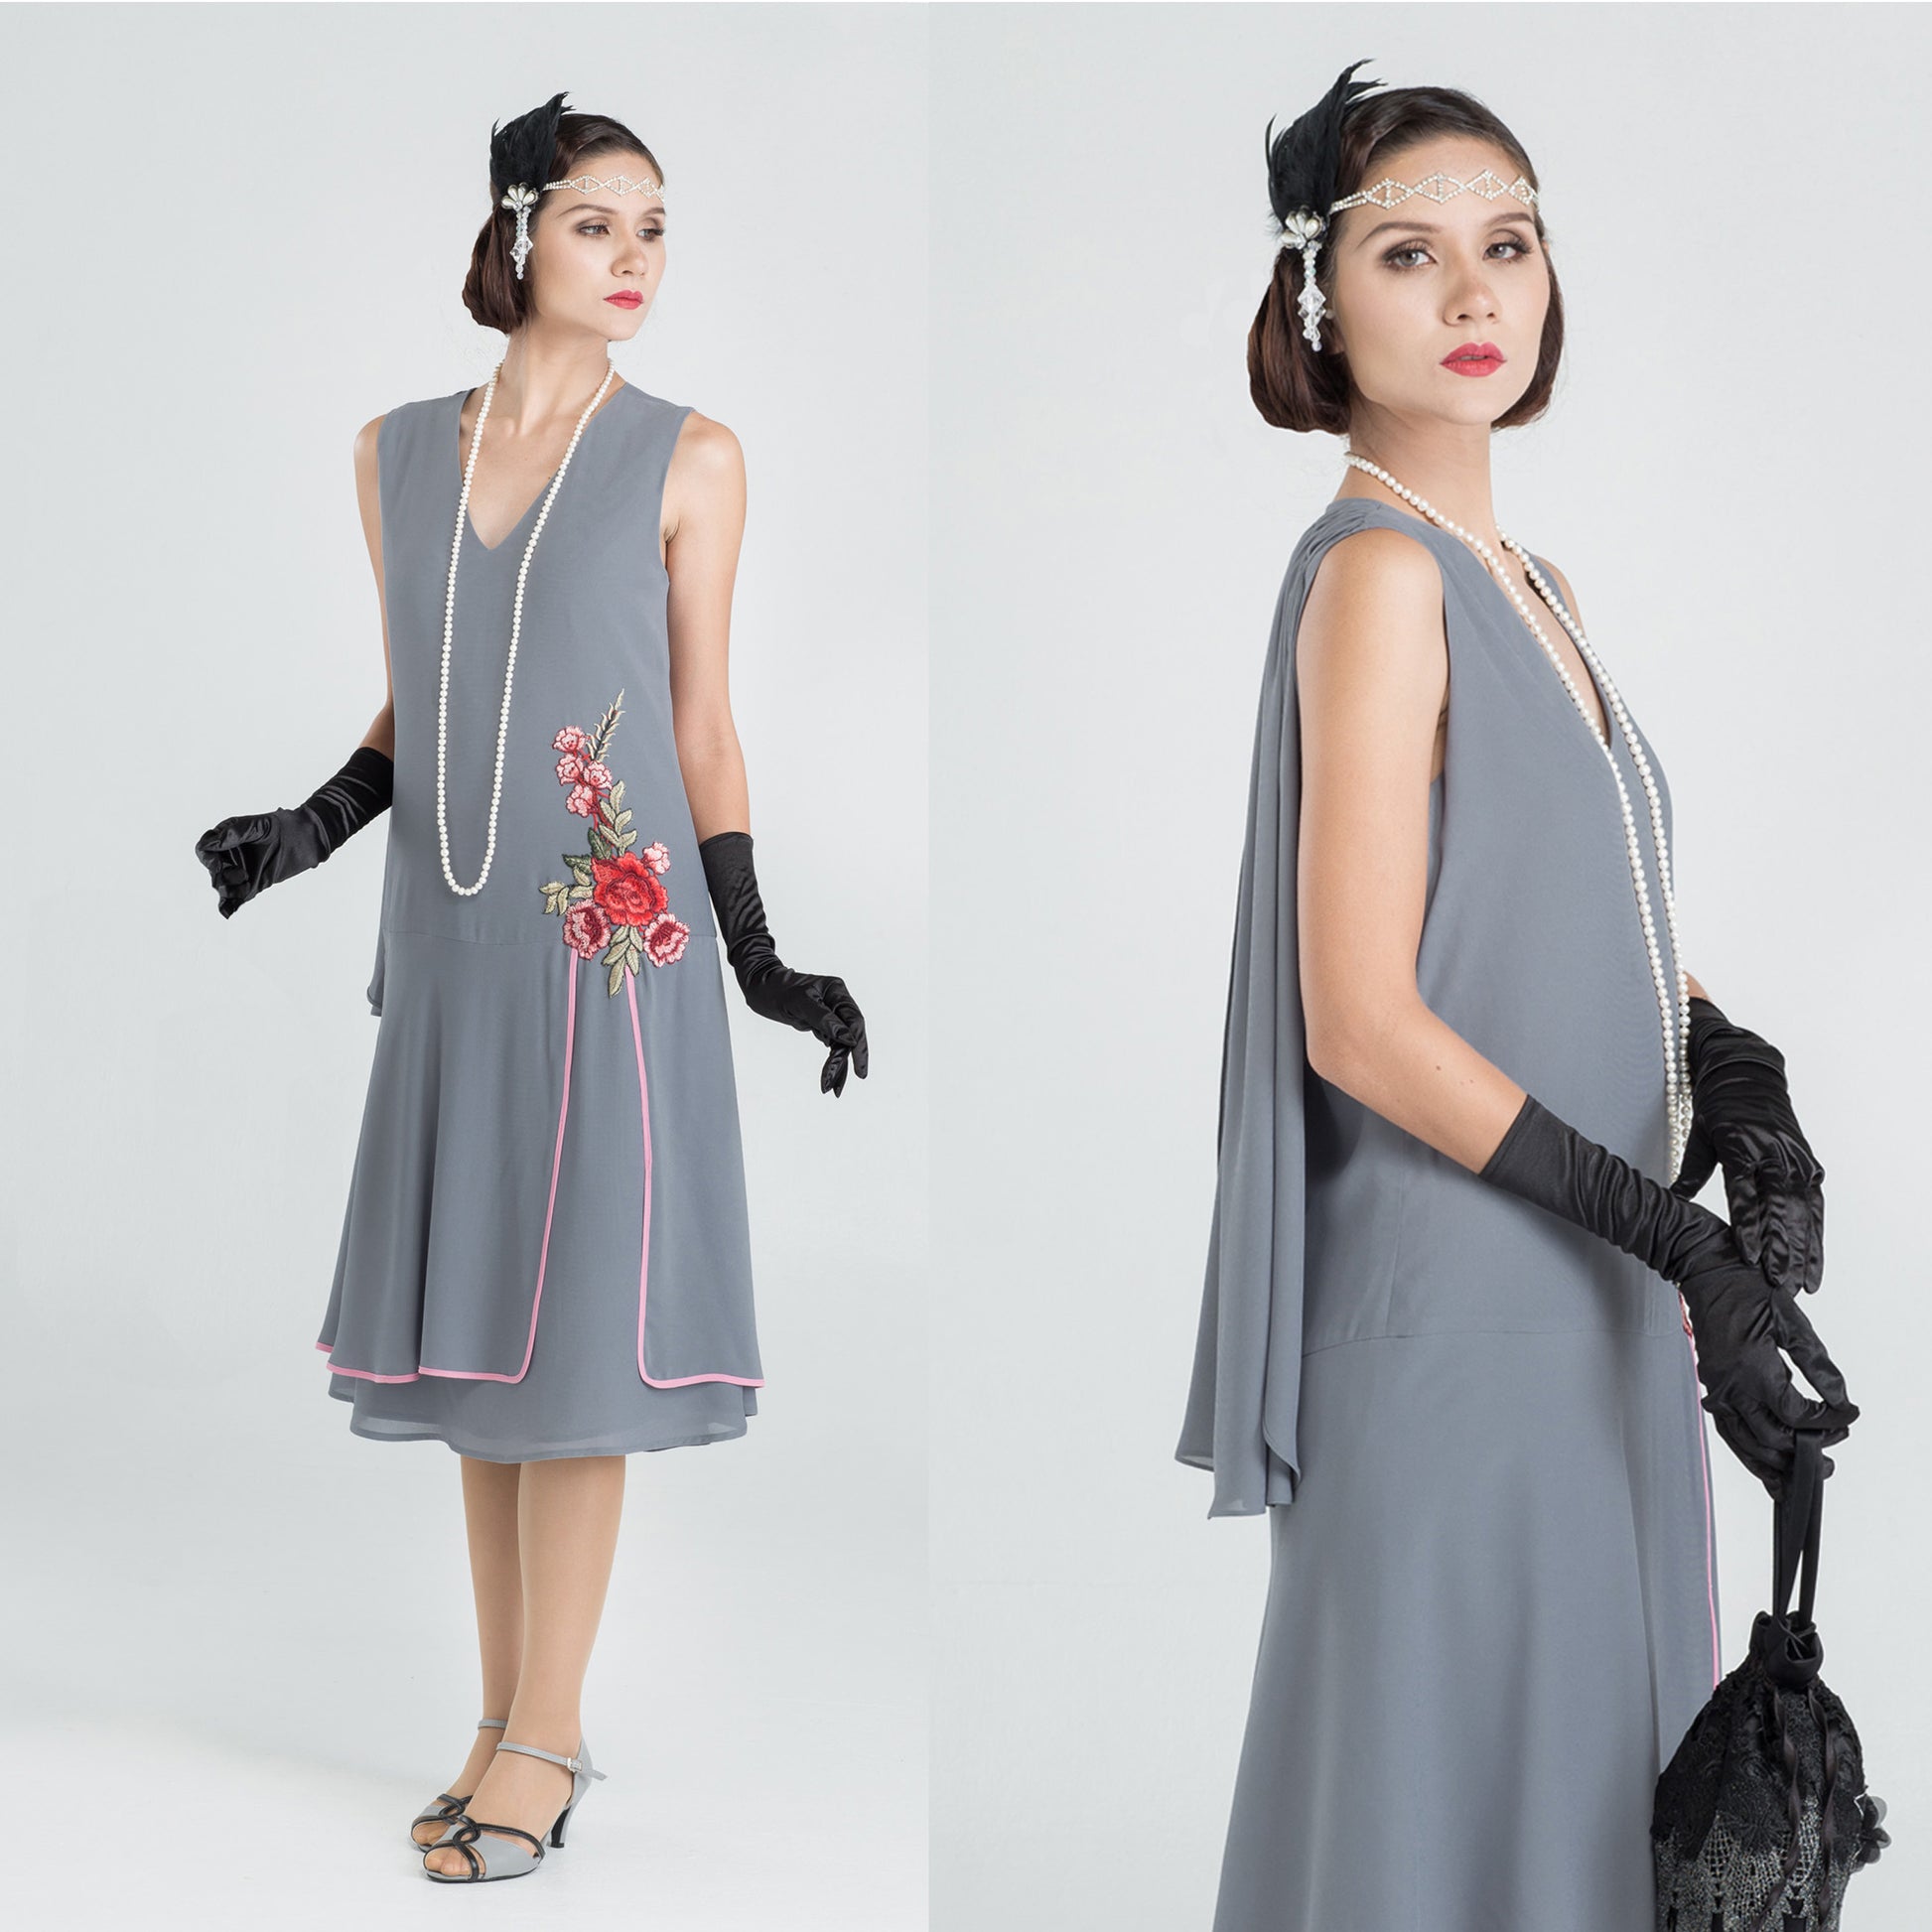 Grey chiffon Gatsby evening dress with a shoulder train - a vintage-inspired dress